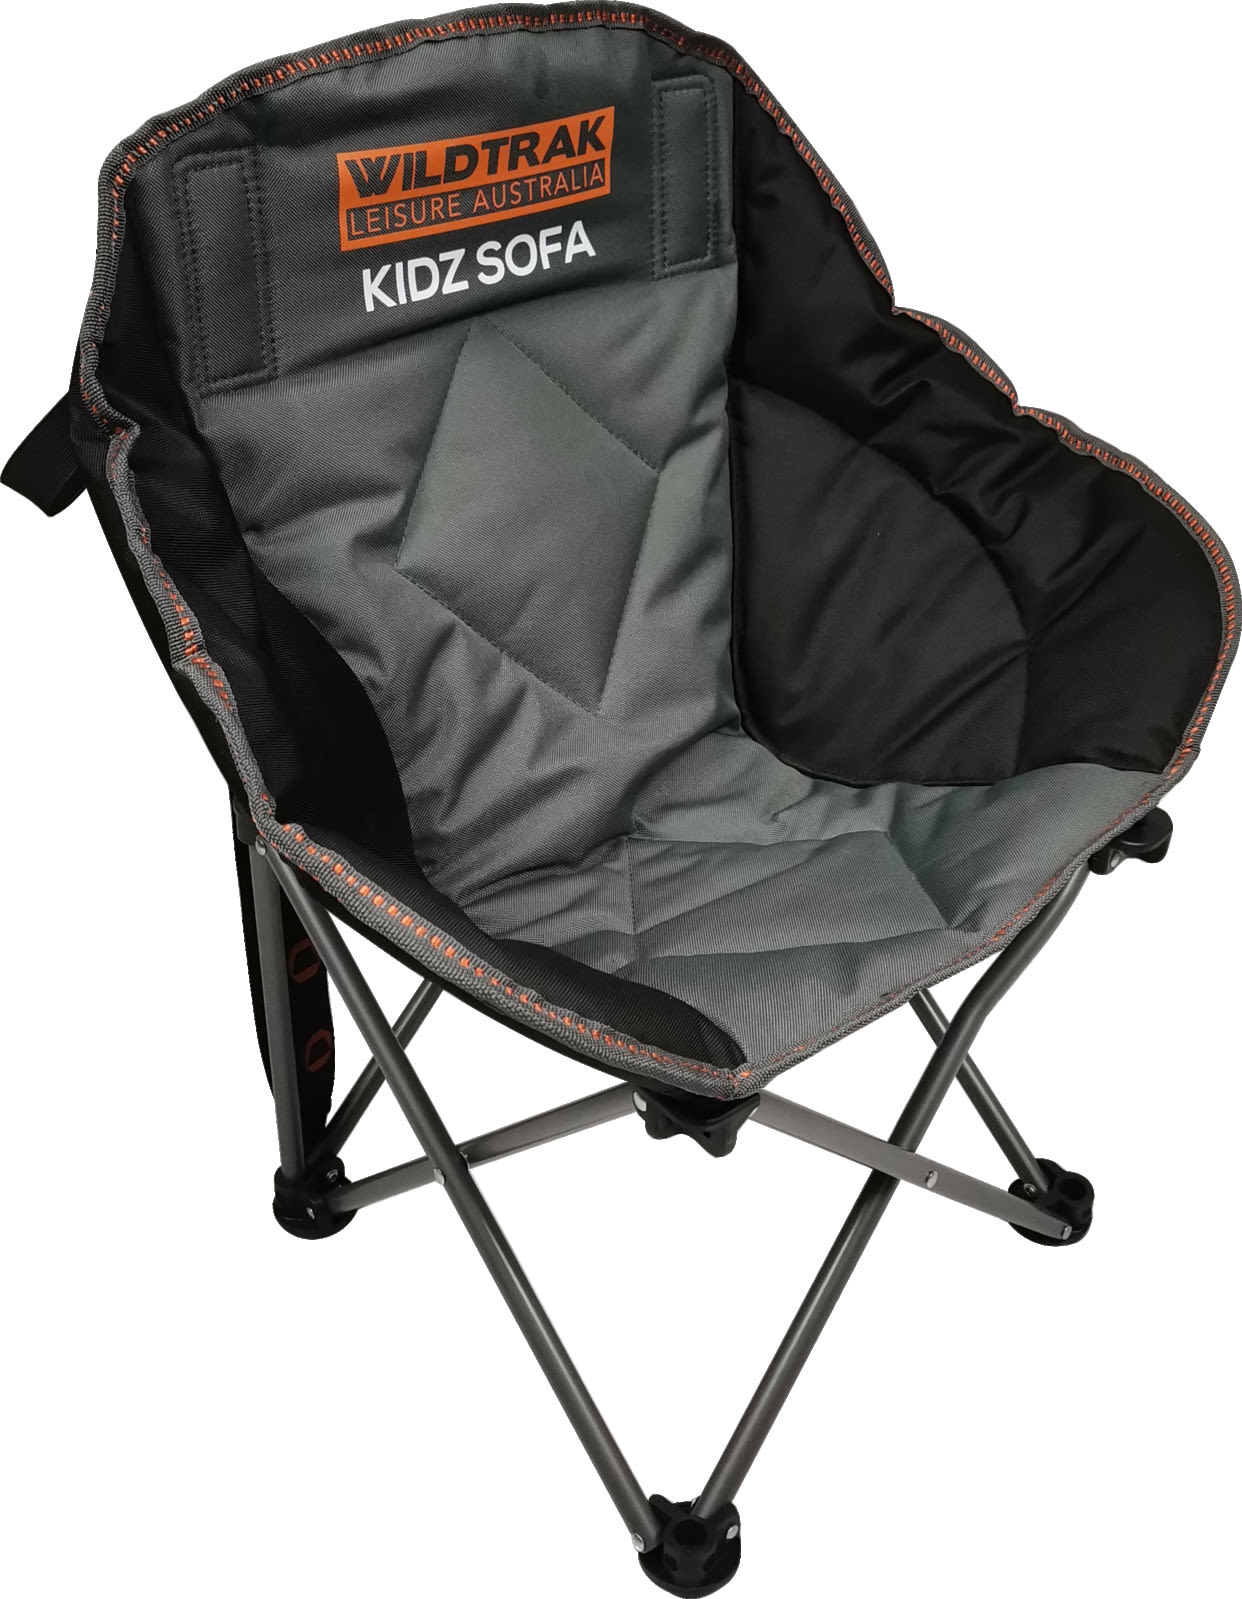 Wildtrak Kids Sofa Camp Chair